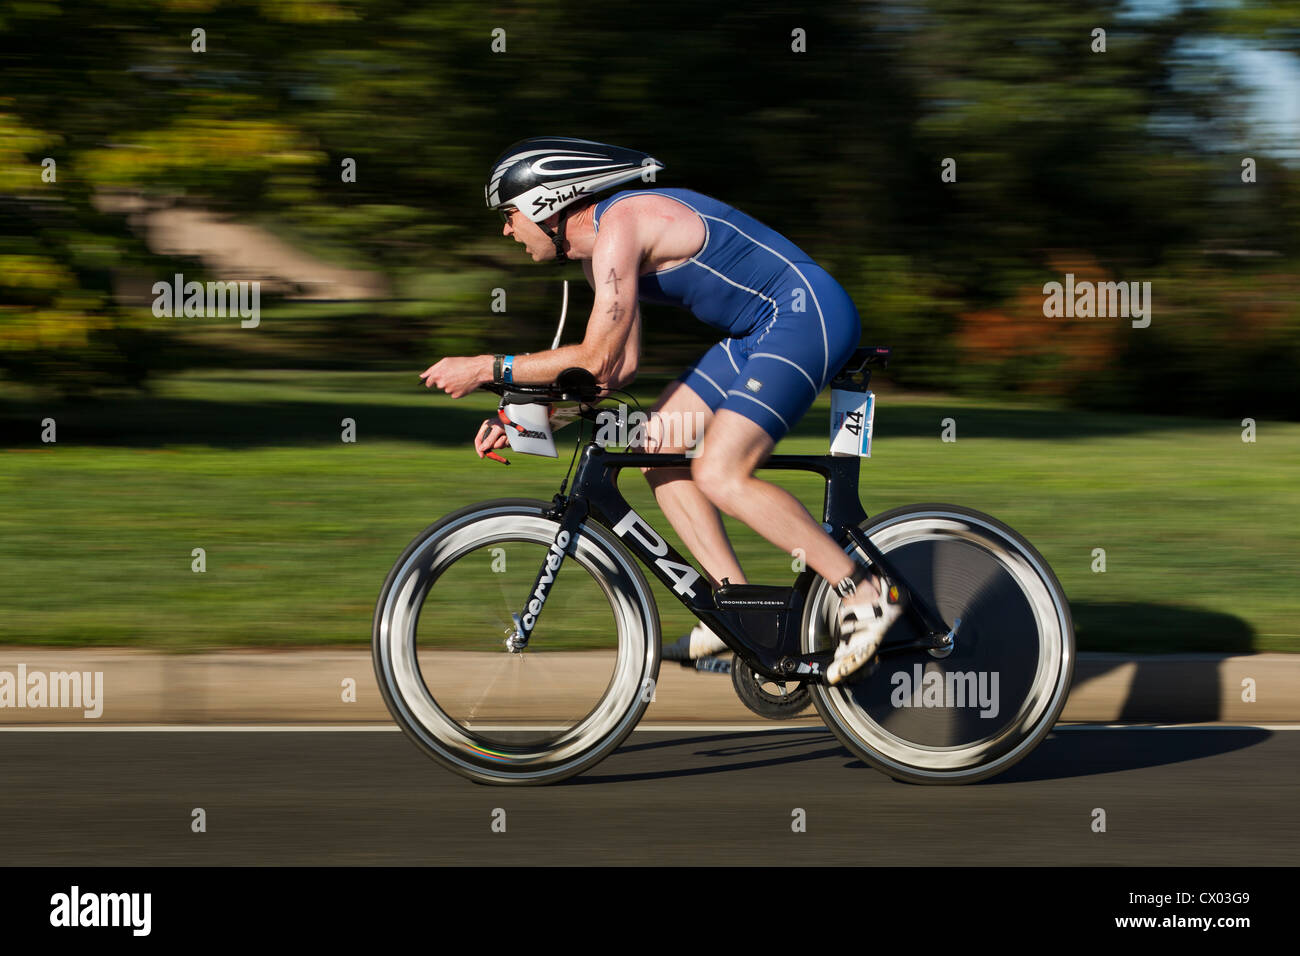 Cyclist racing in bike race - USA Stock Photo